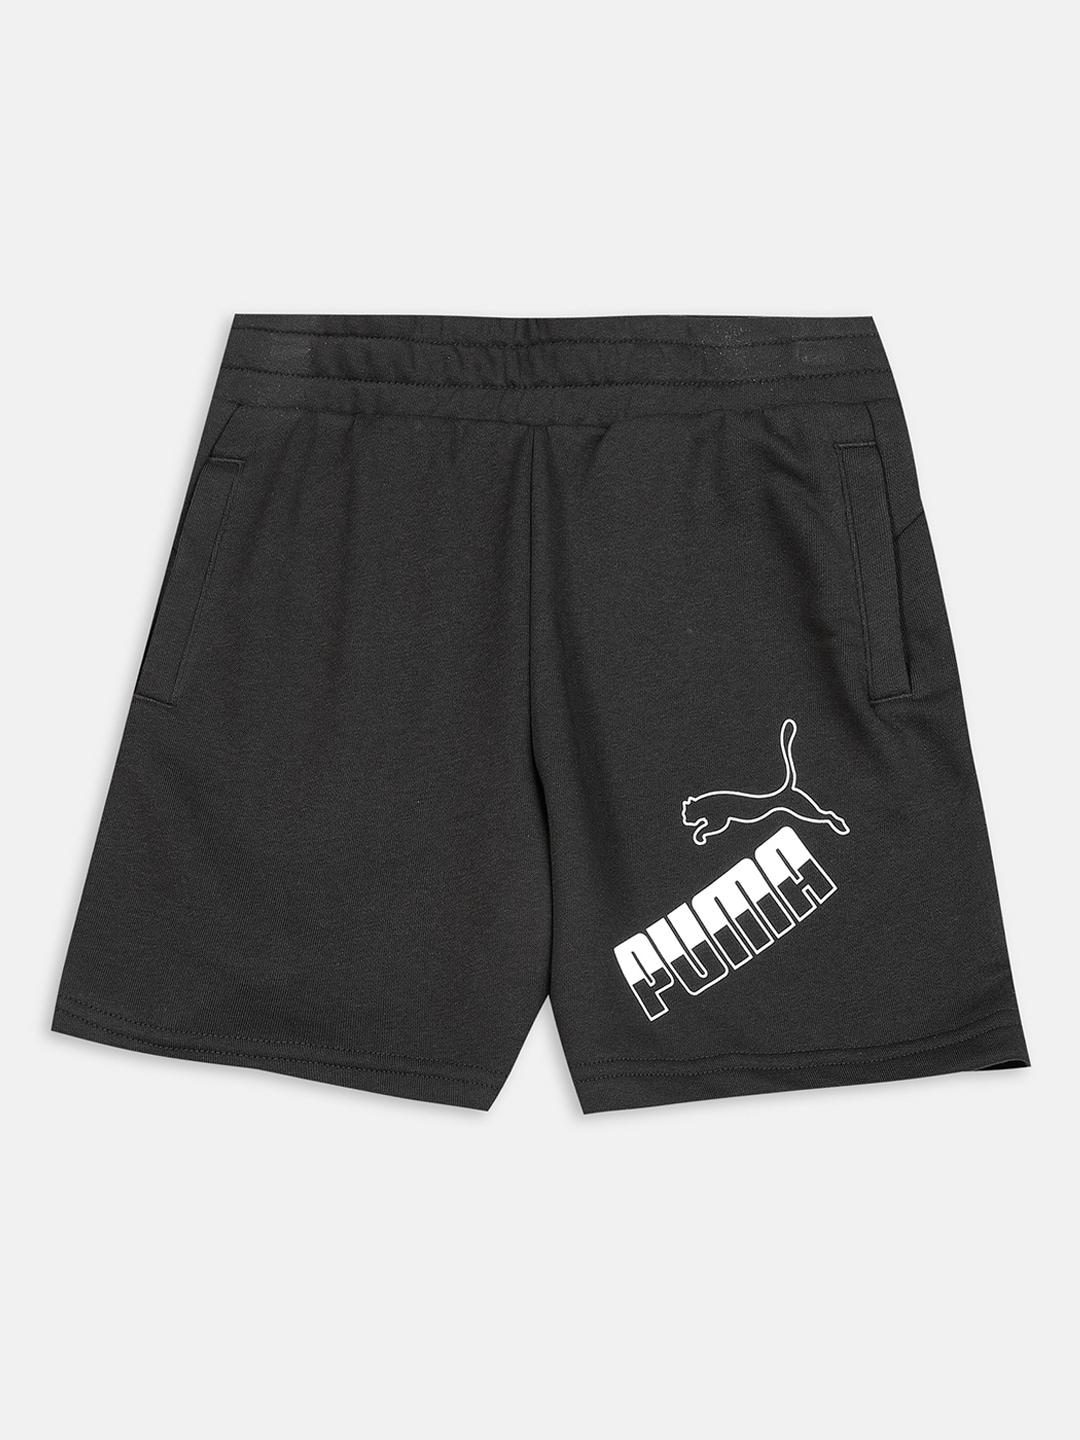 Puma Boys Black Solid Cotton Amplified Big Logo Youth Shorts